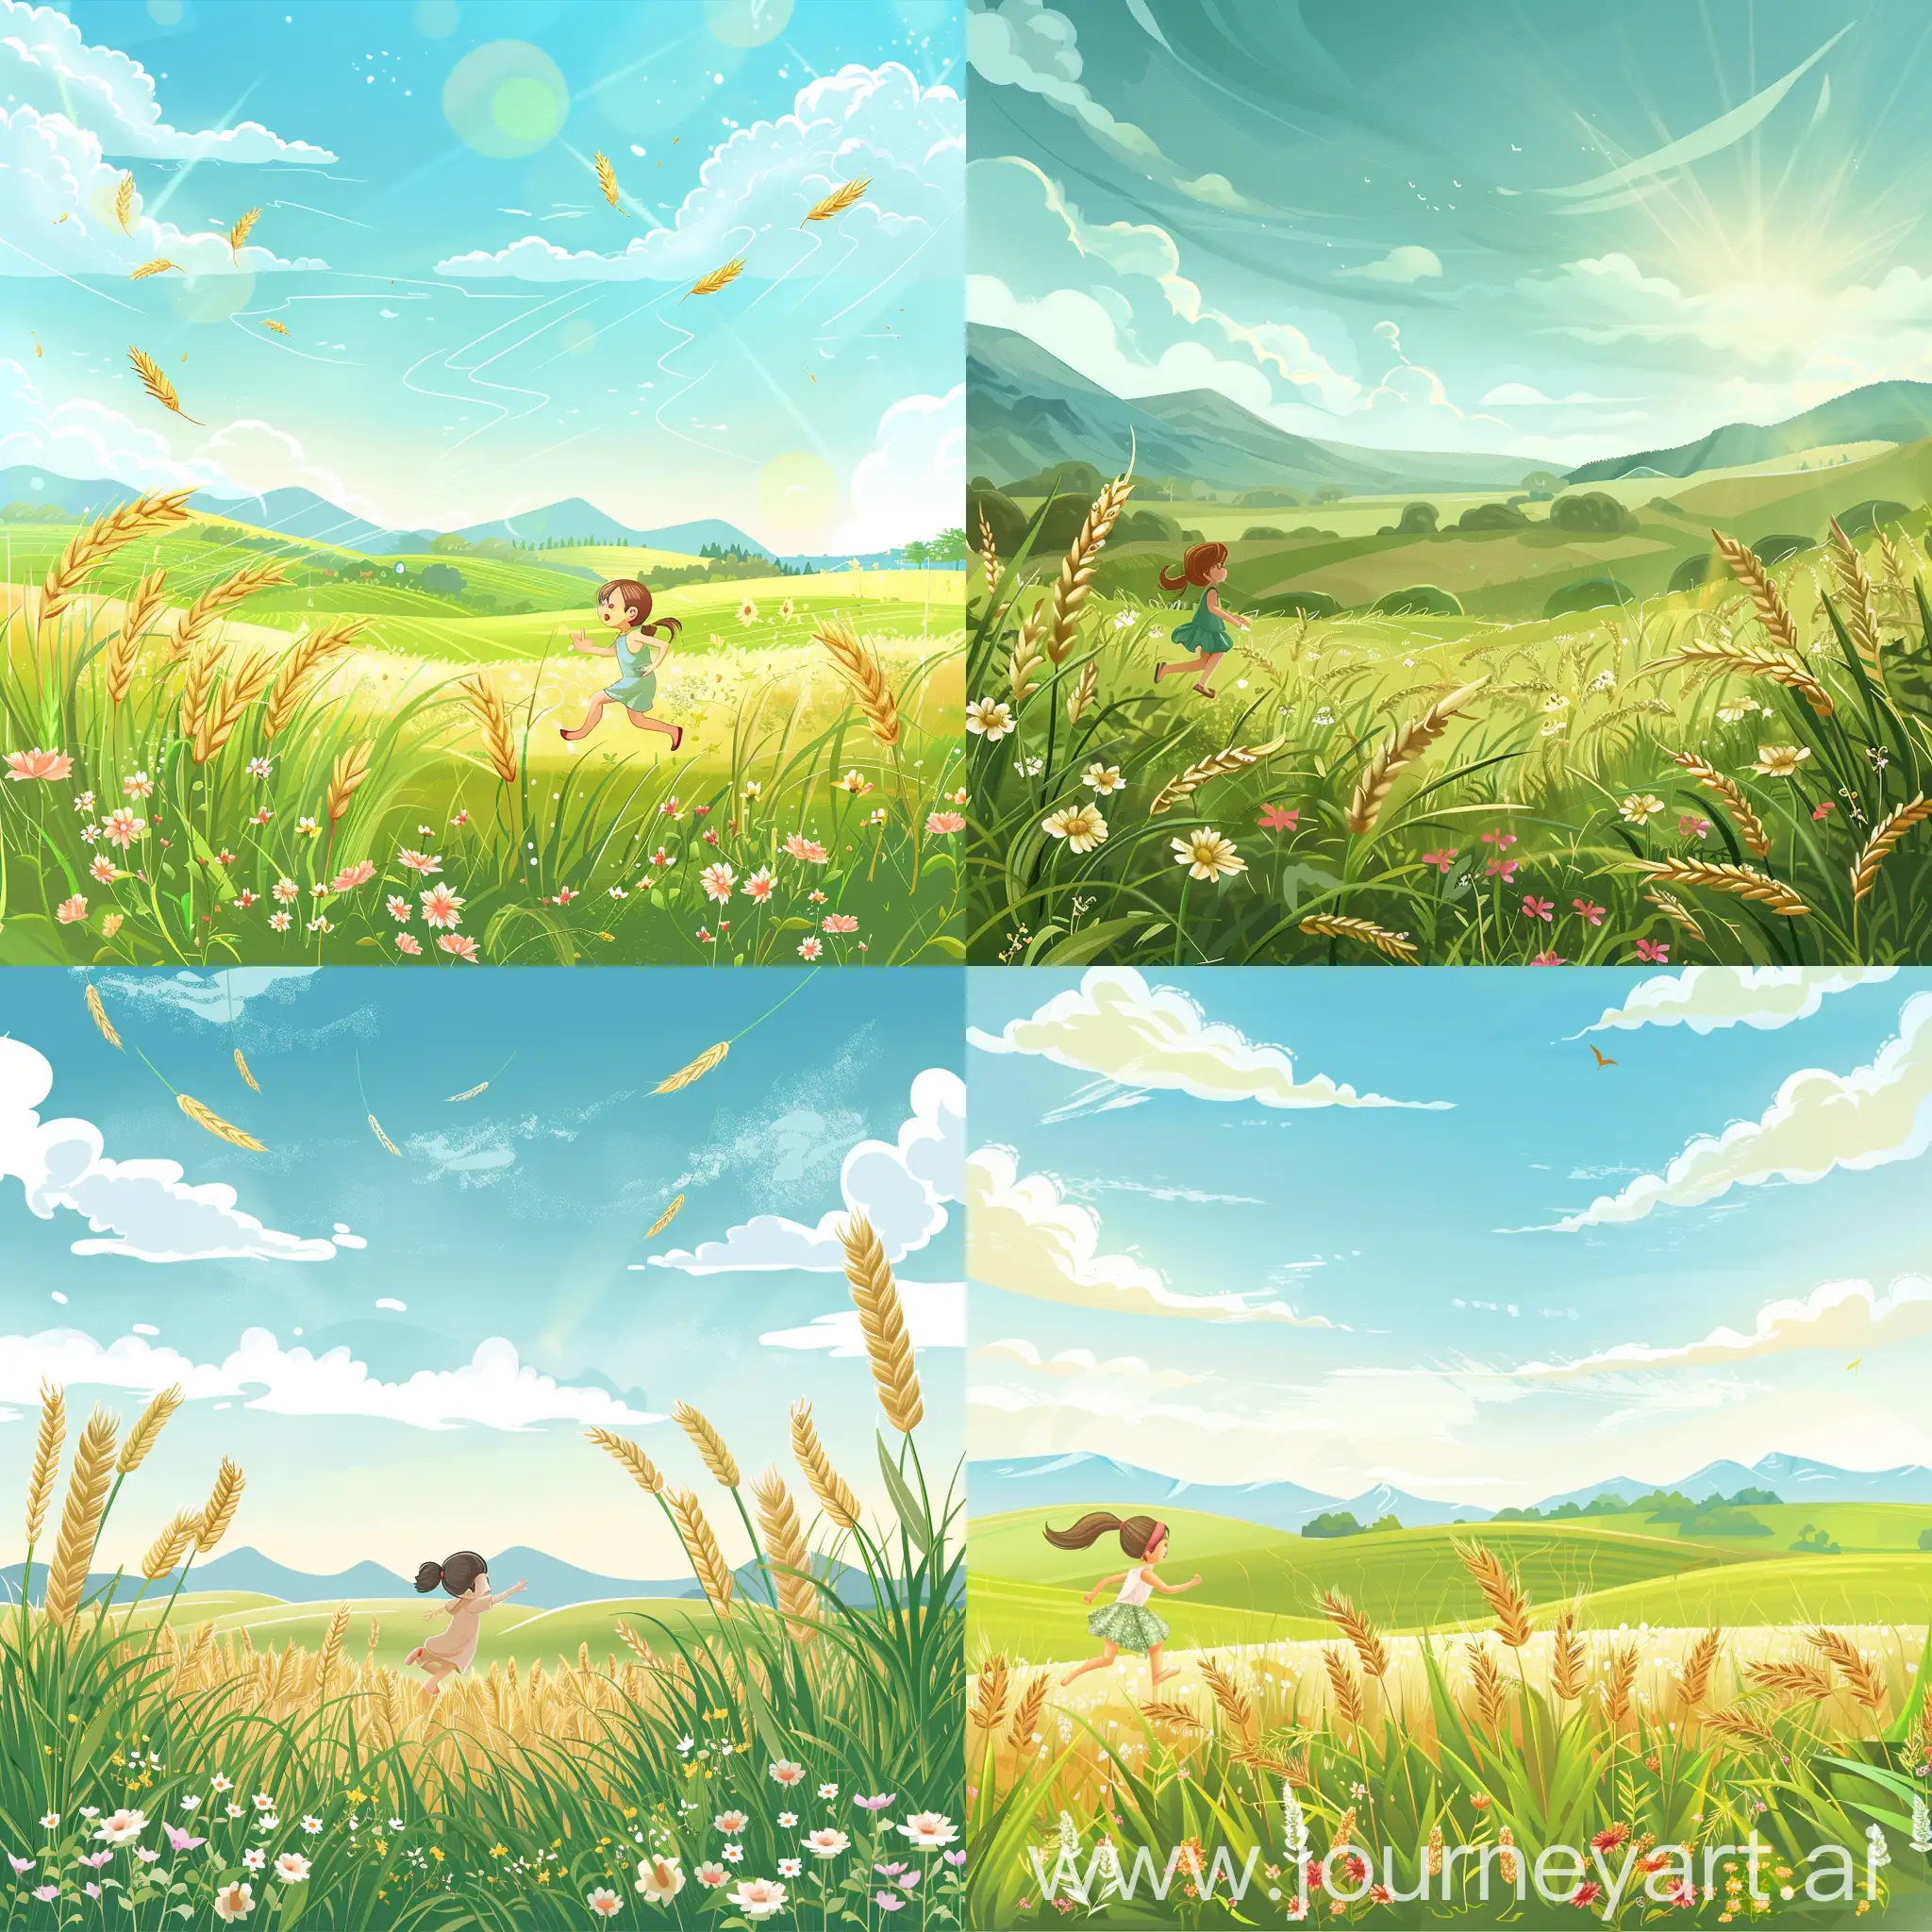 Cheerful-Little-Girl-Running-Through-Lush-Wheat-Fields-with-Mountain-Scenery